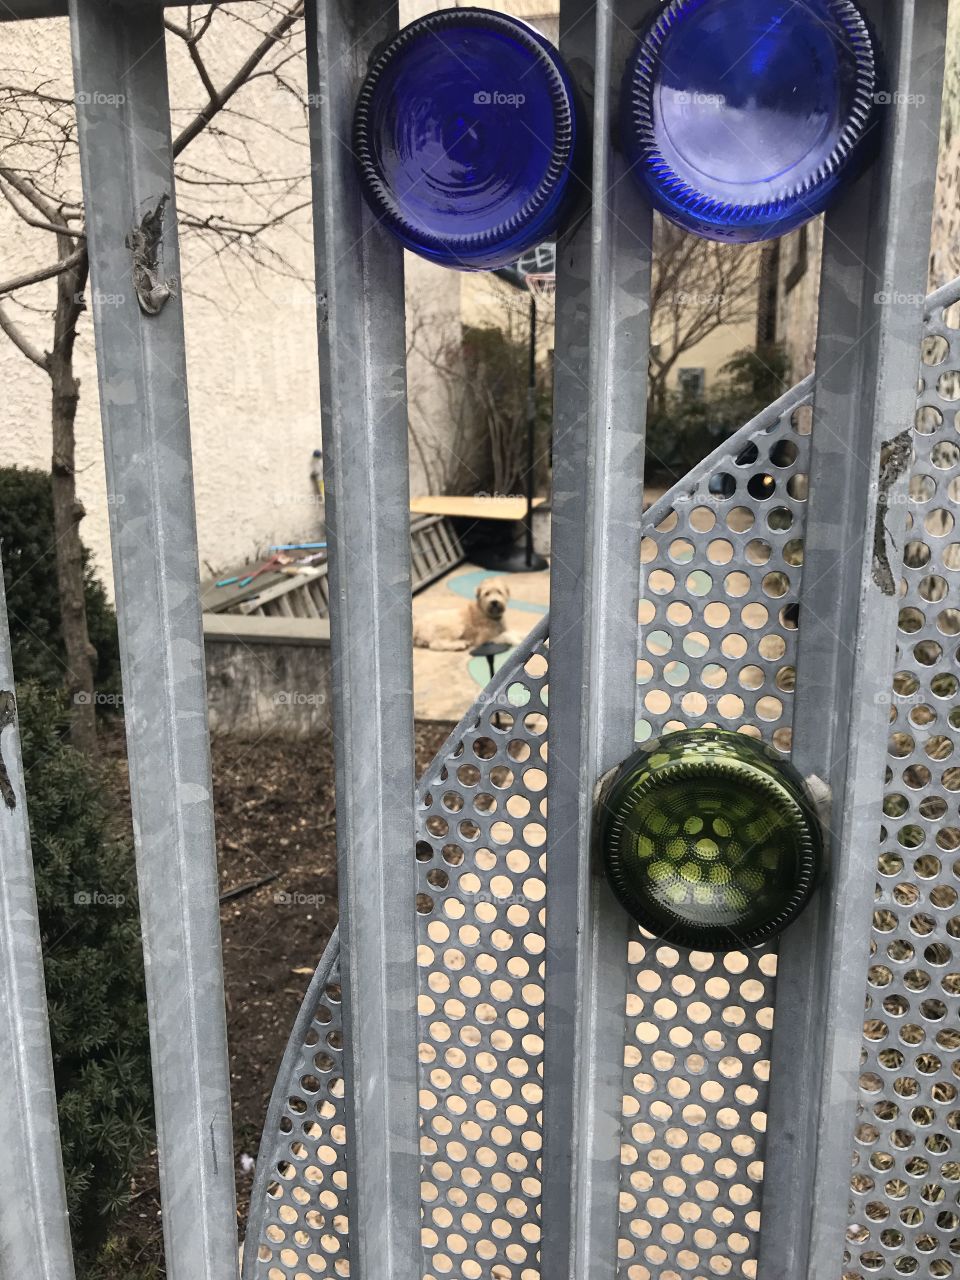 Dog through fence